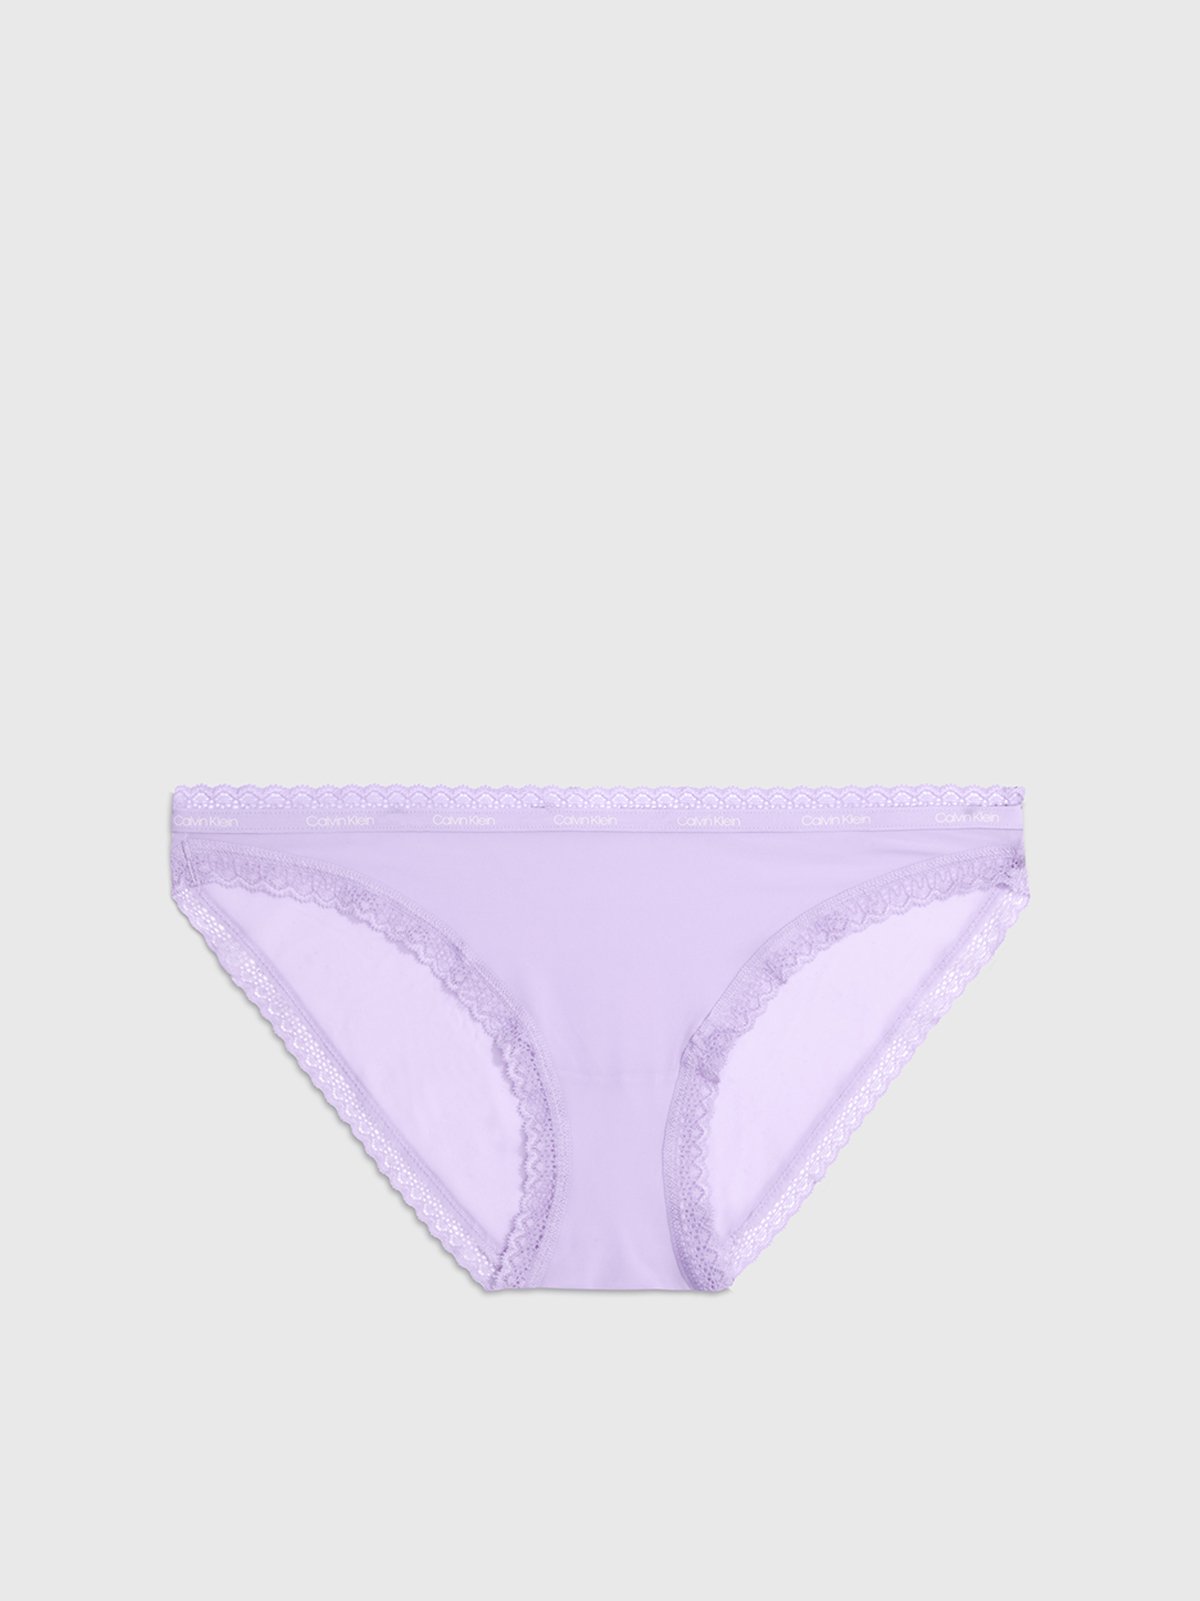 Calvin Klein Underwear Women's Panties